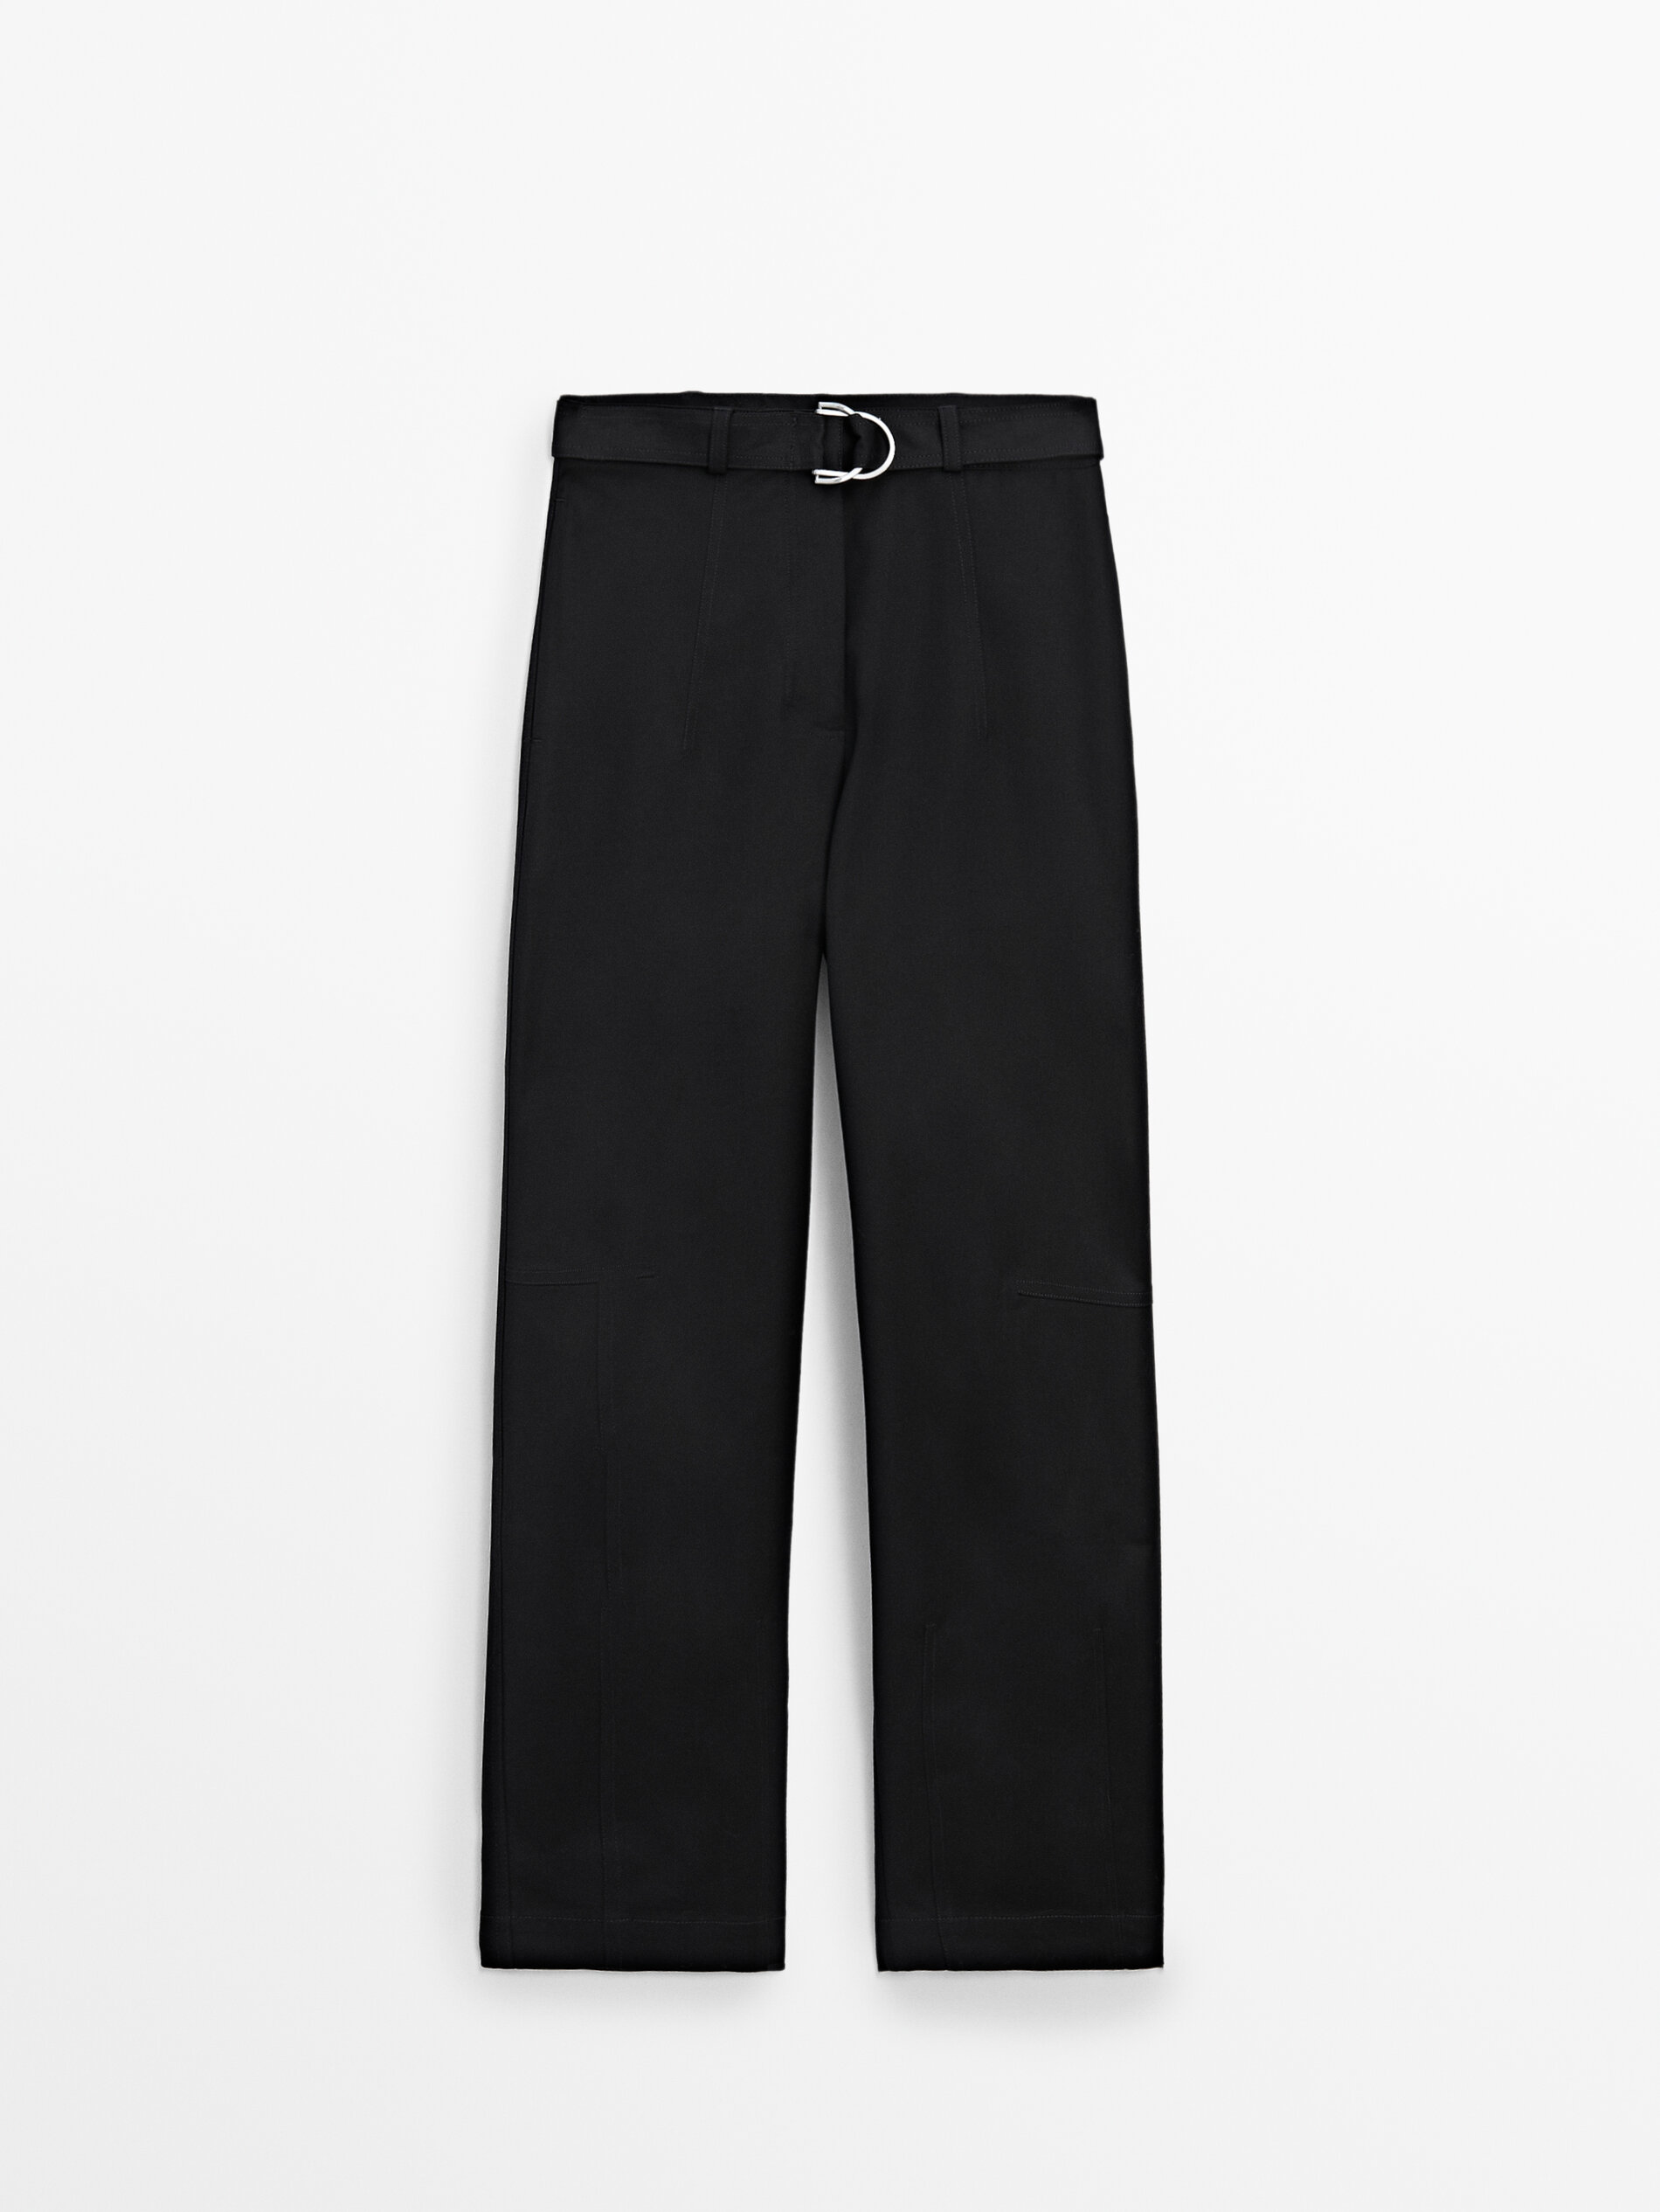 Black barrel-fit trousers with belt · Black · Dressy | Massimo Dutti